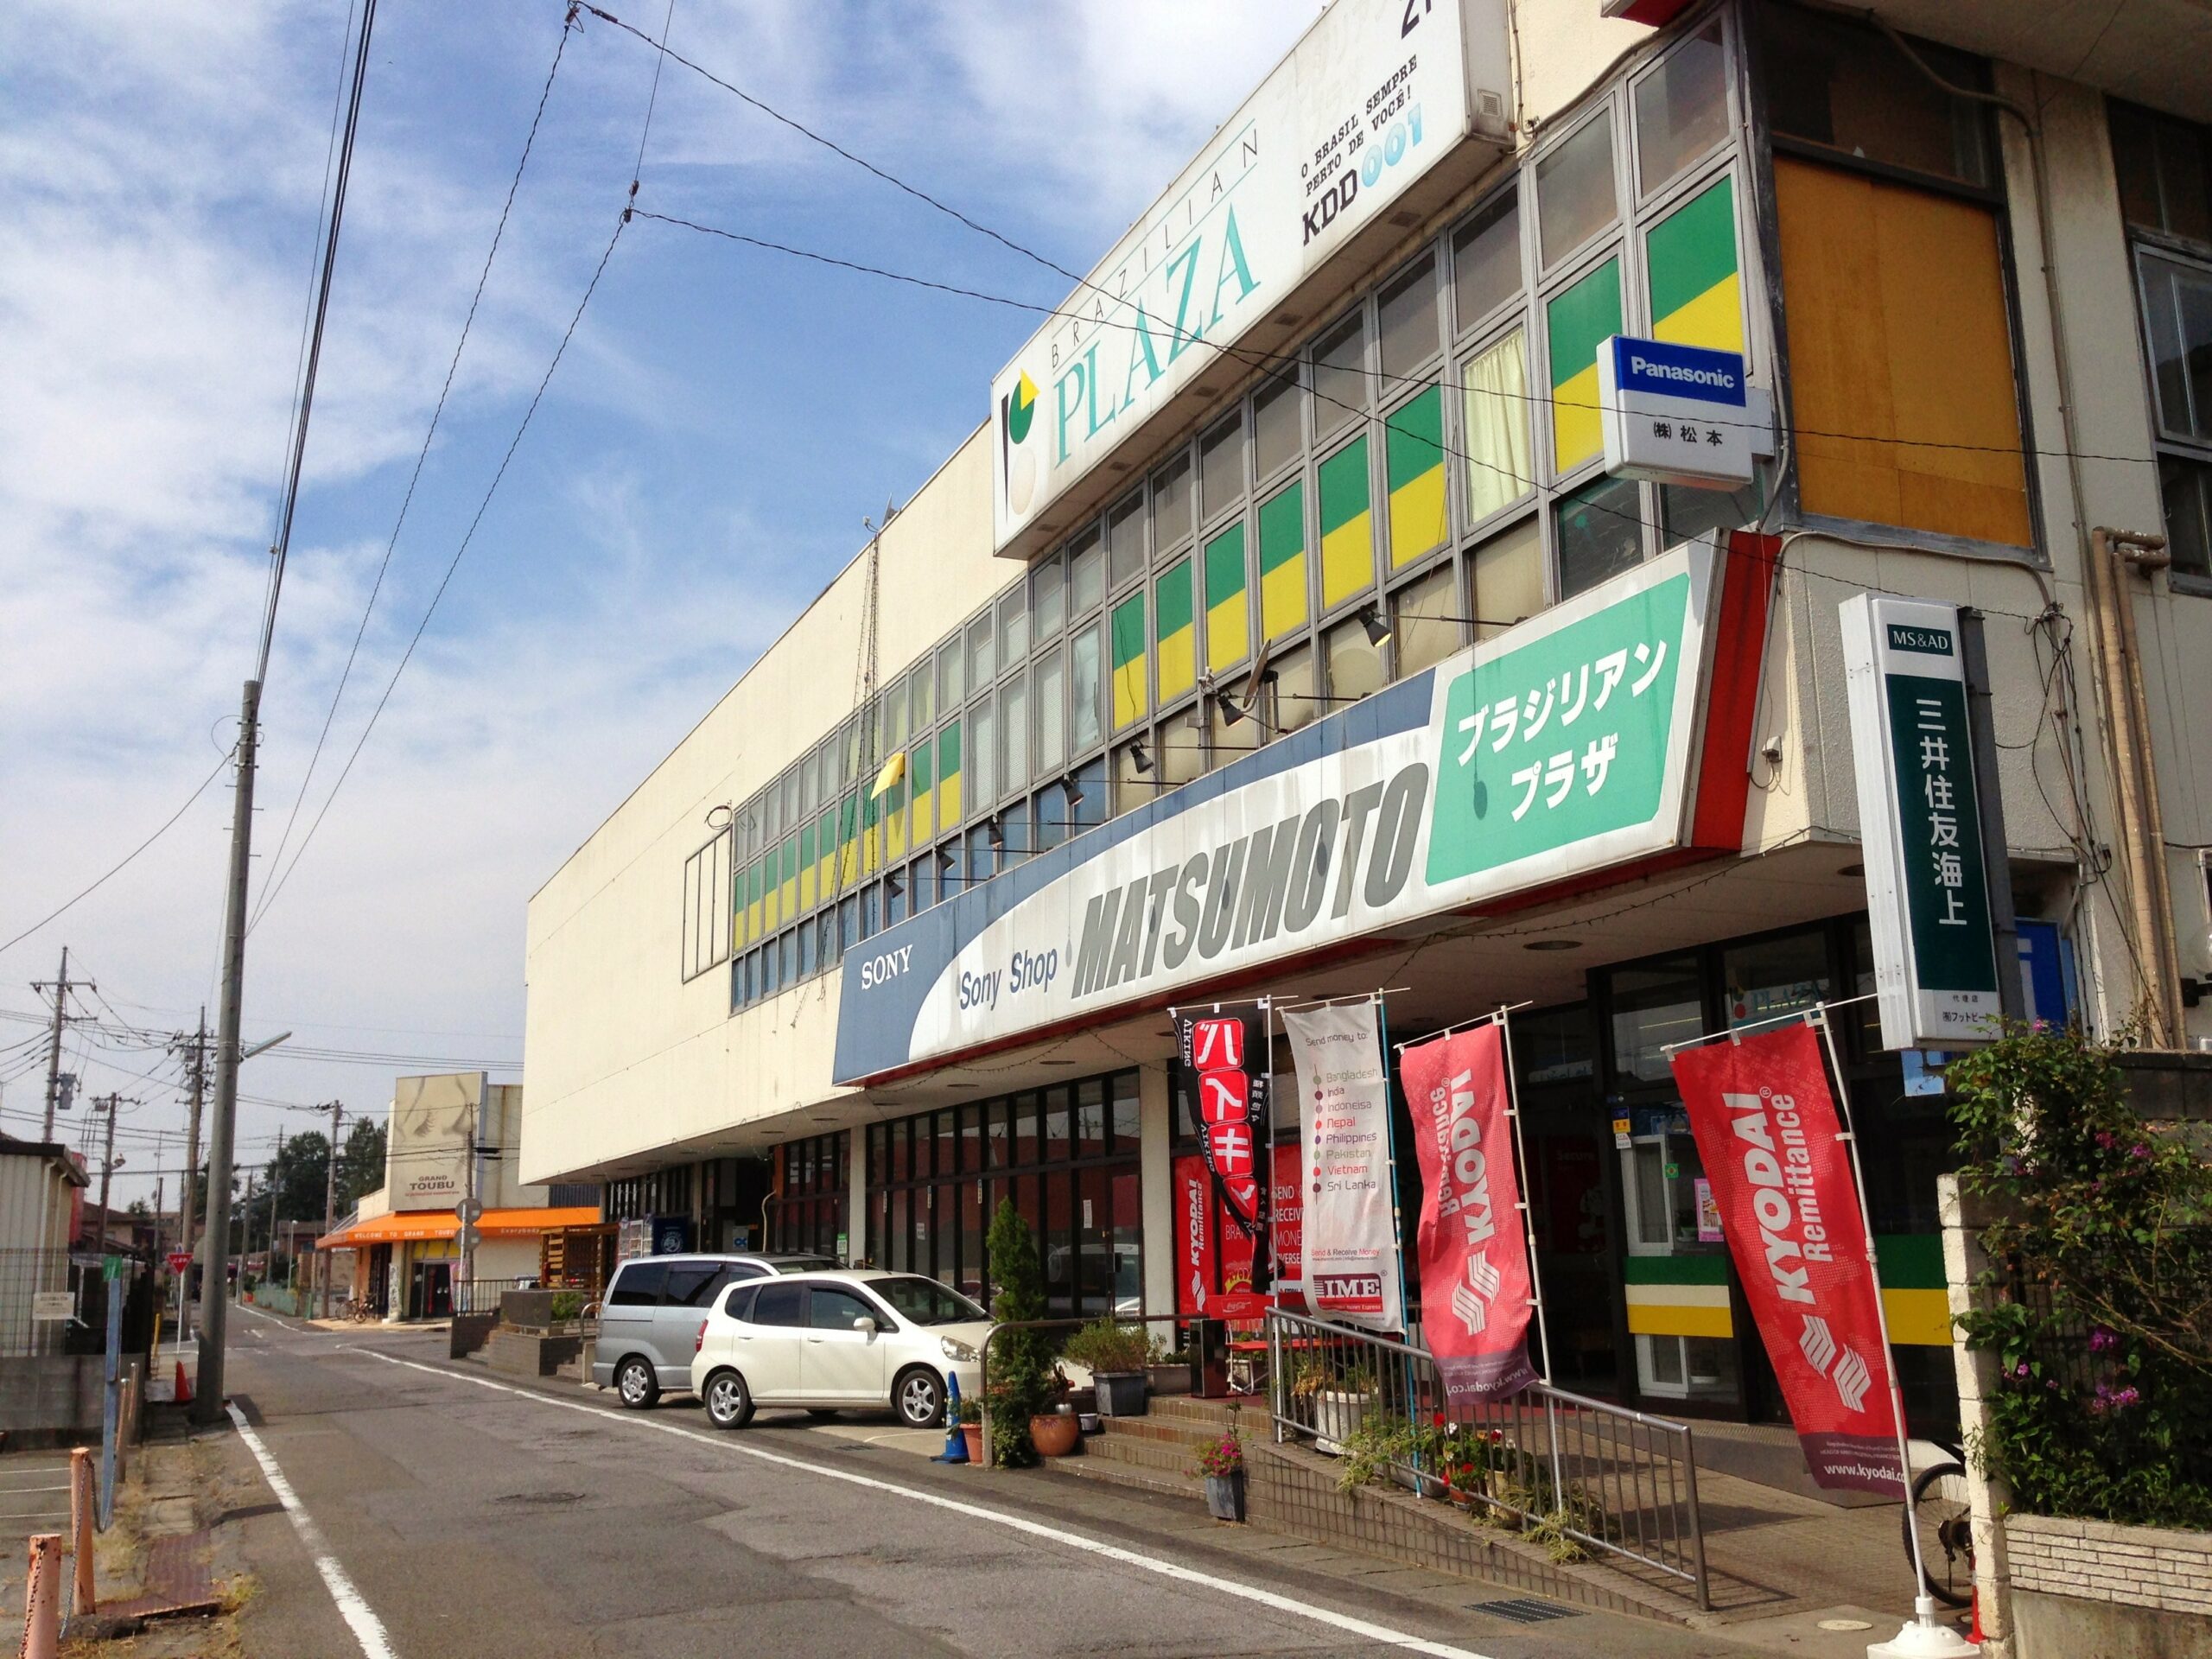 Brazilian town in Japan / 大泉ブラジリアンタウン